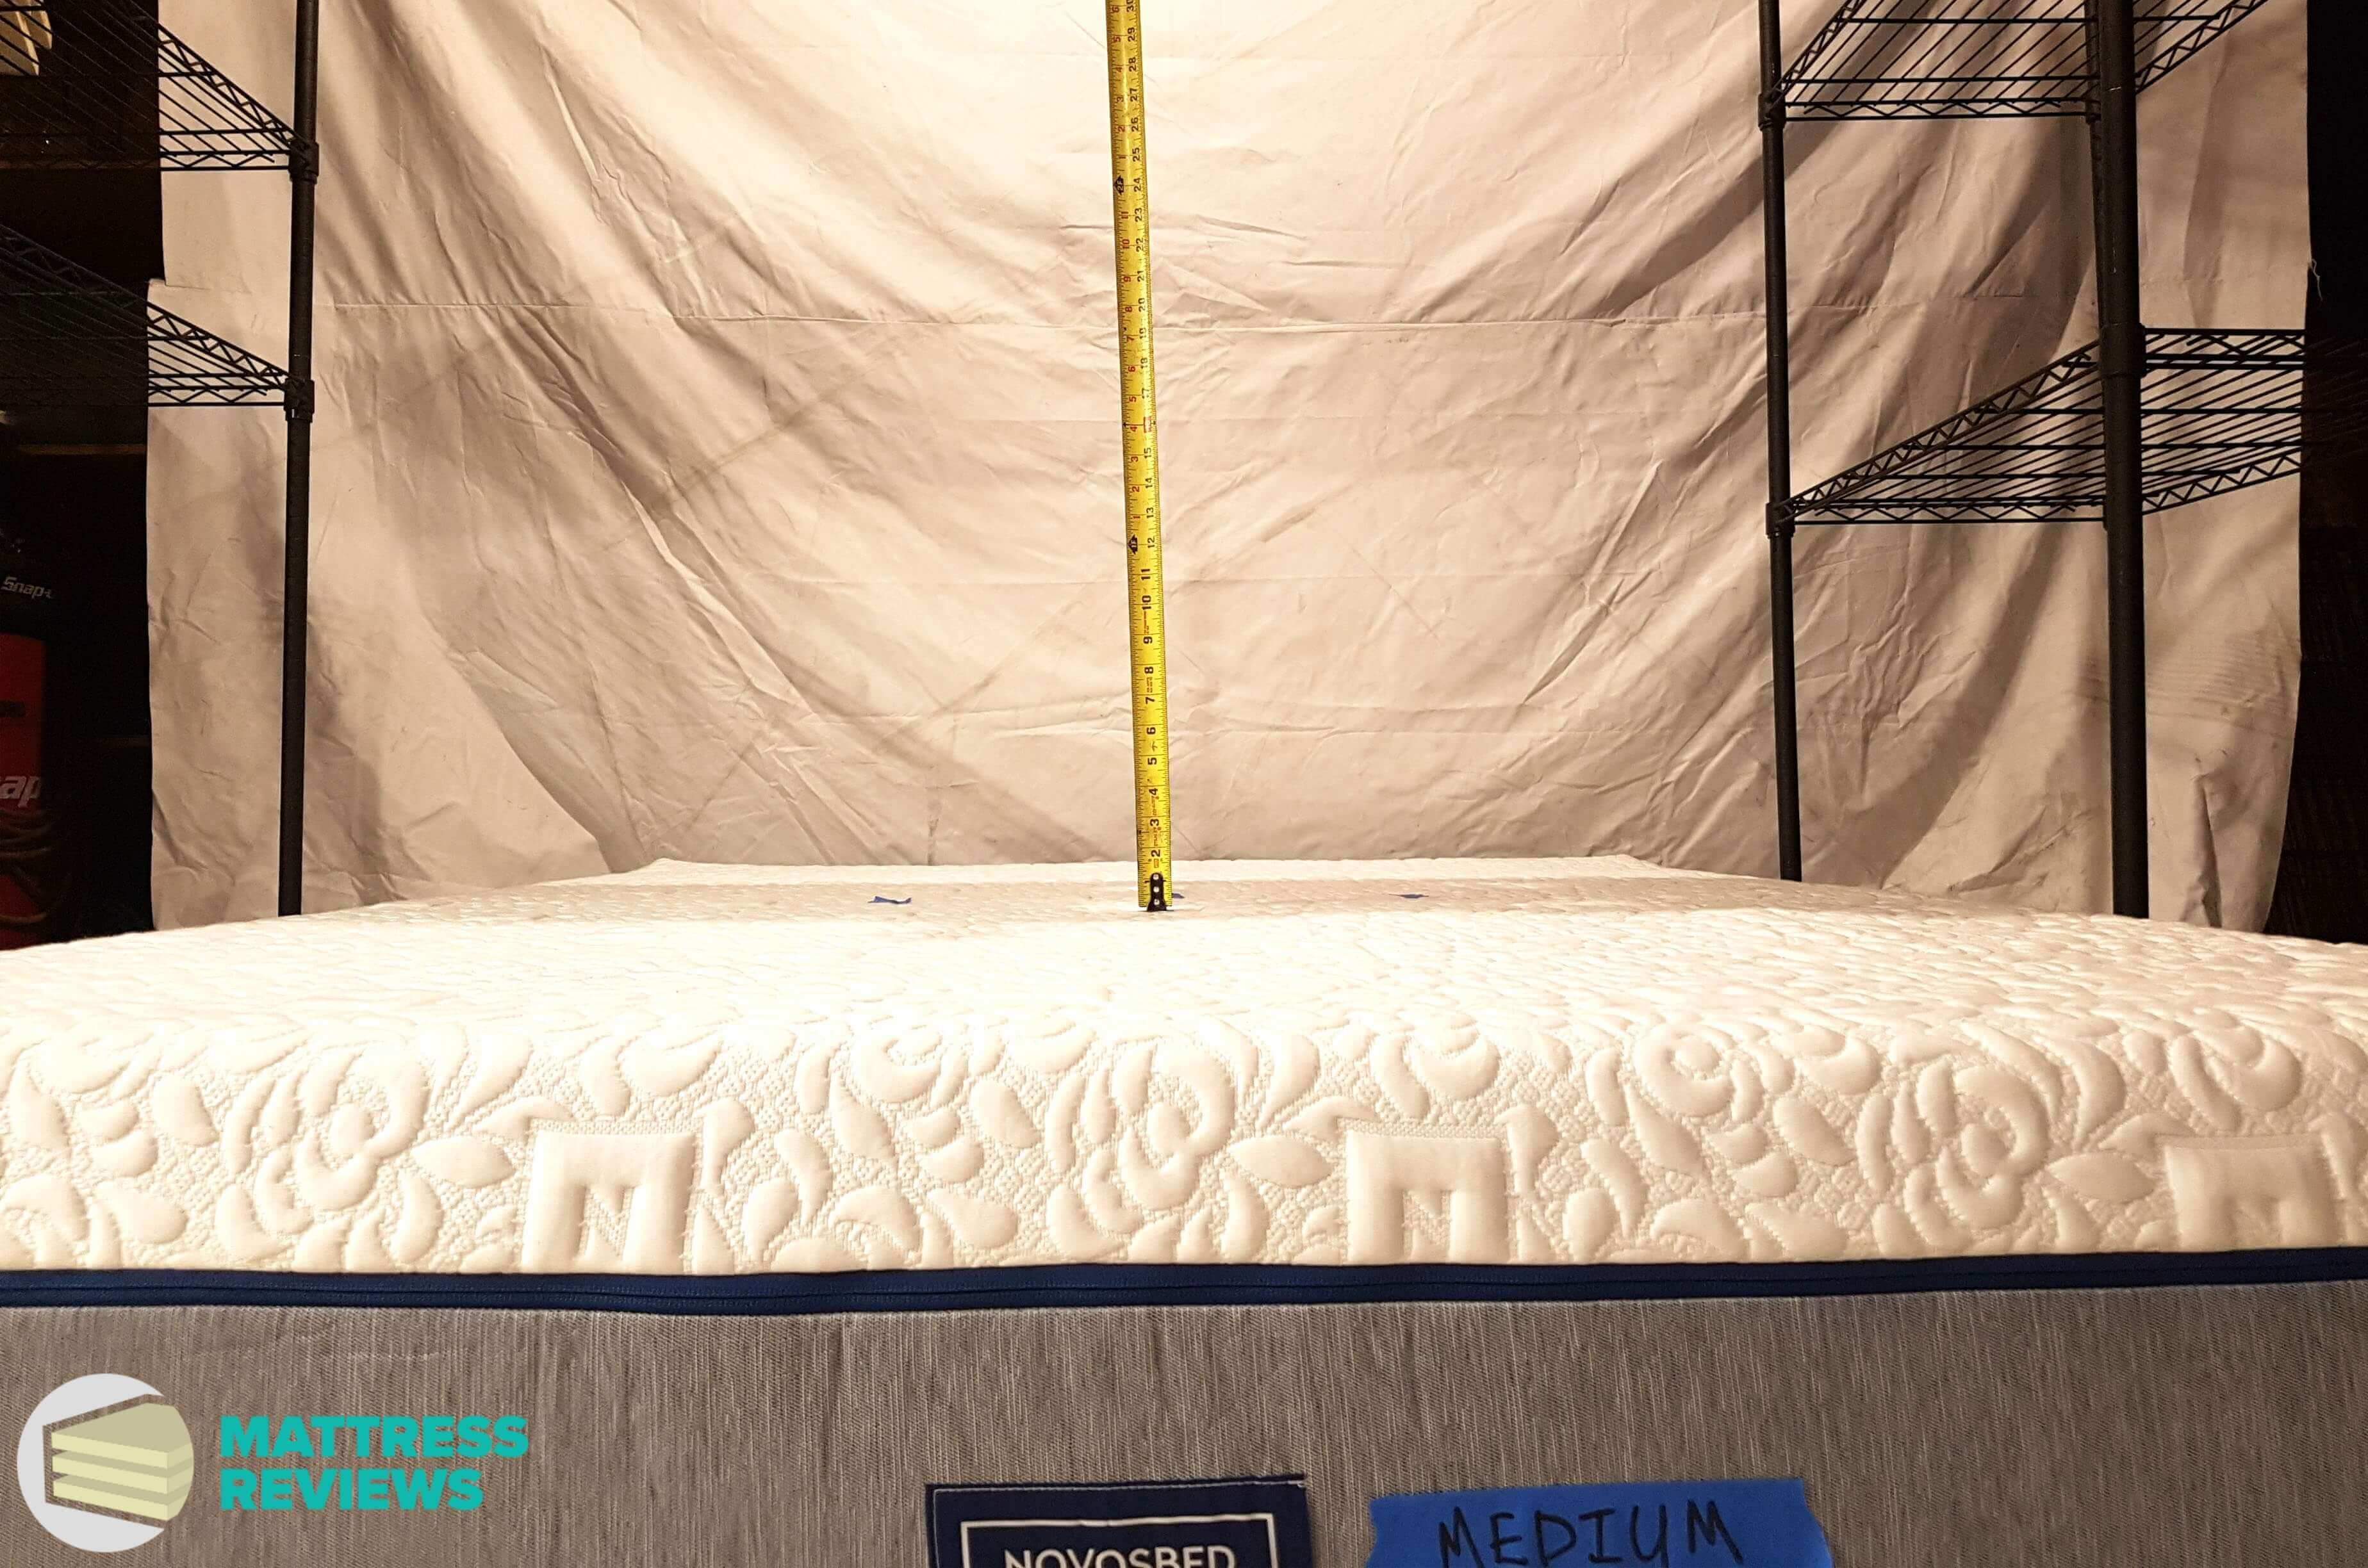 Image of the Novosbed (Medium) mattress bounce test.